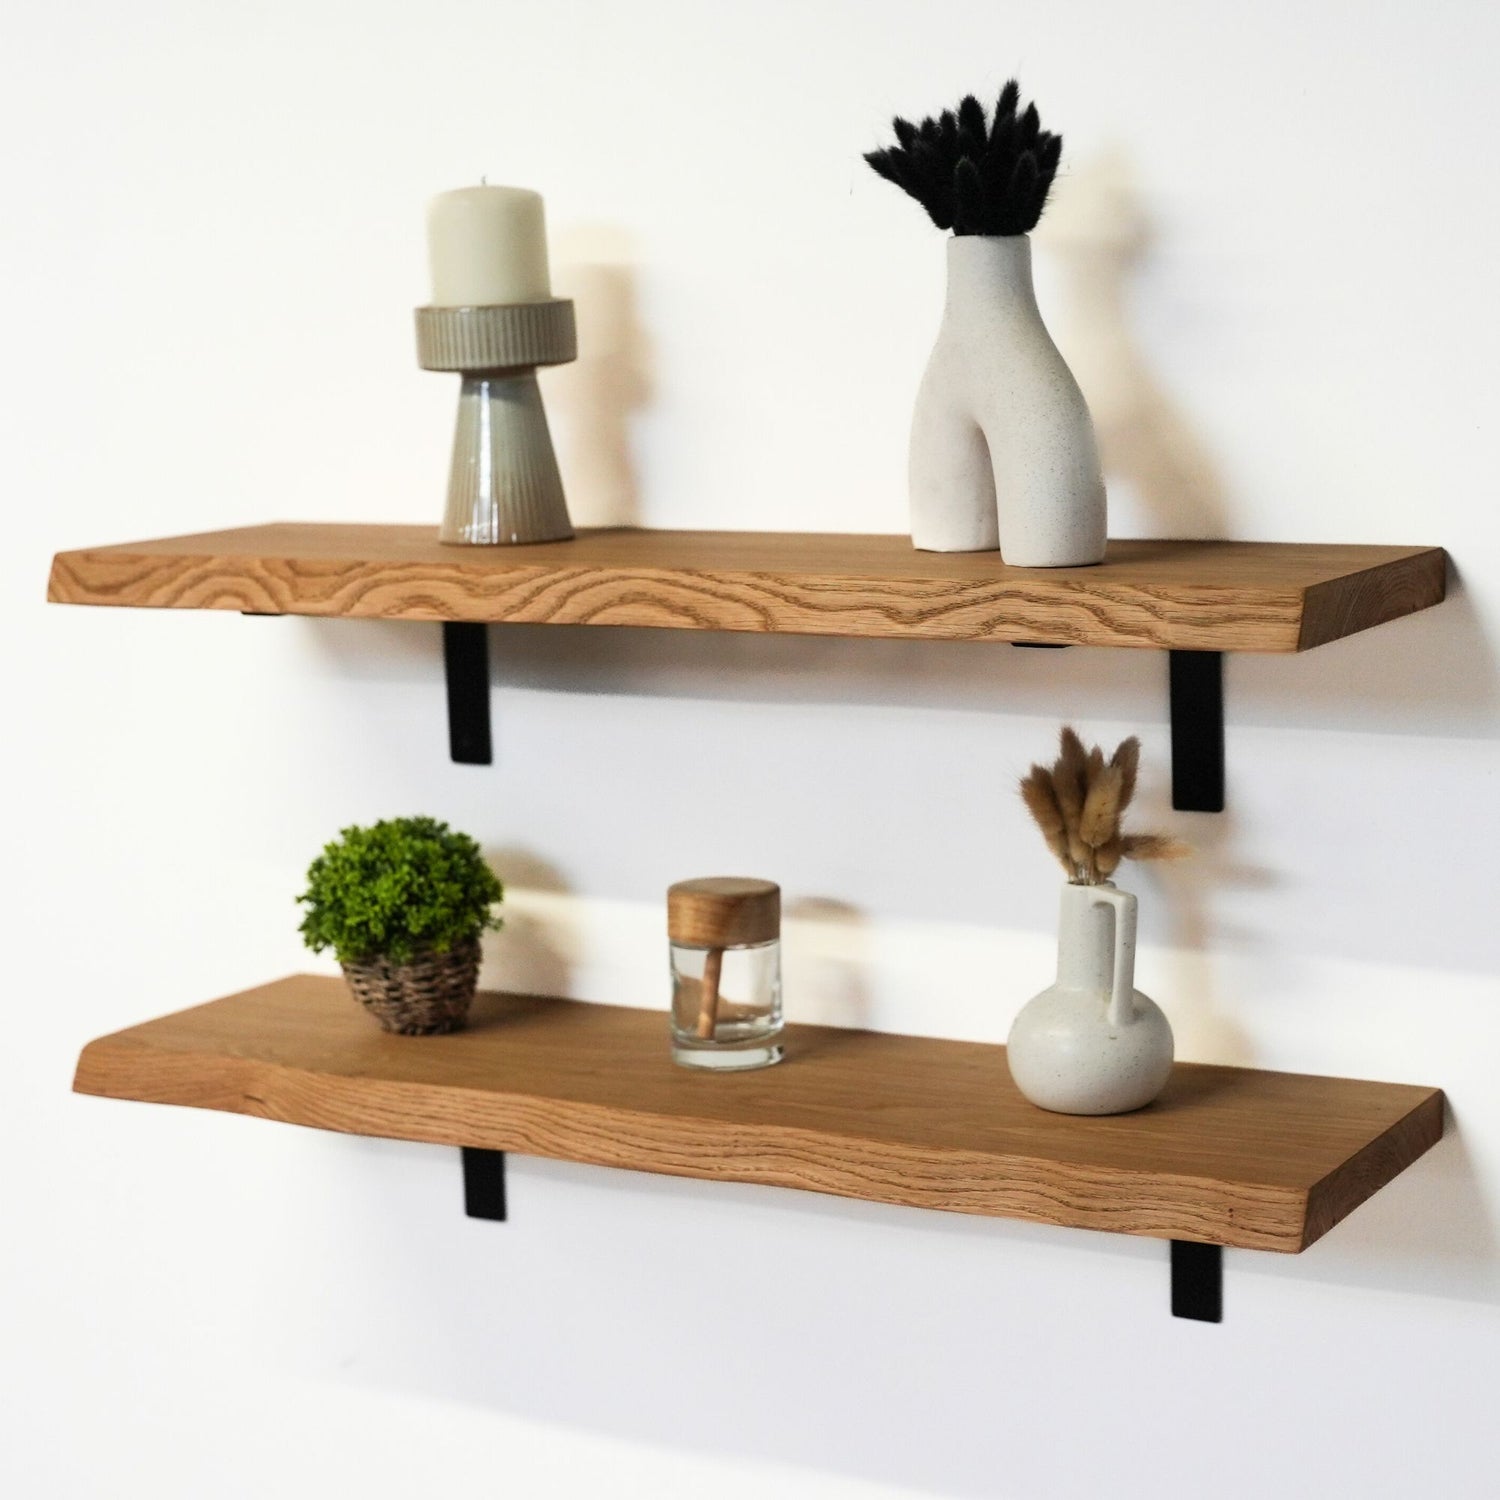 Solid Oak waney edge wooden shelves - Set of two - masterplank uk shop